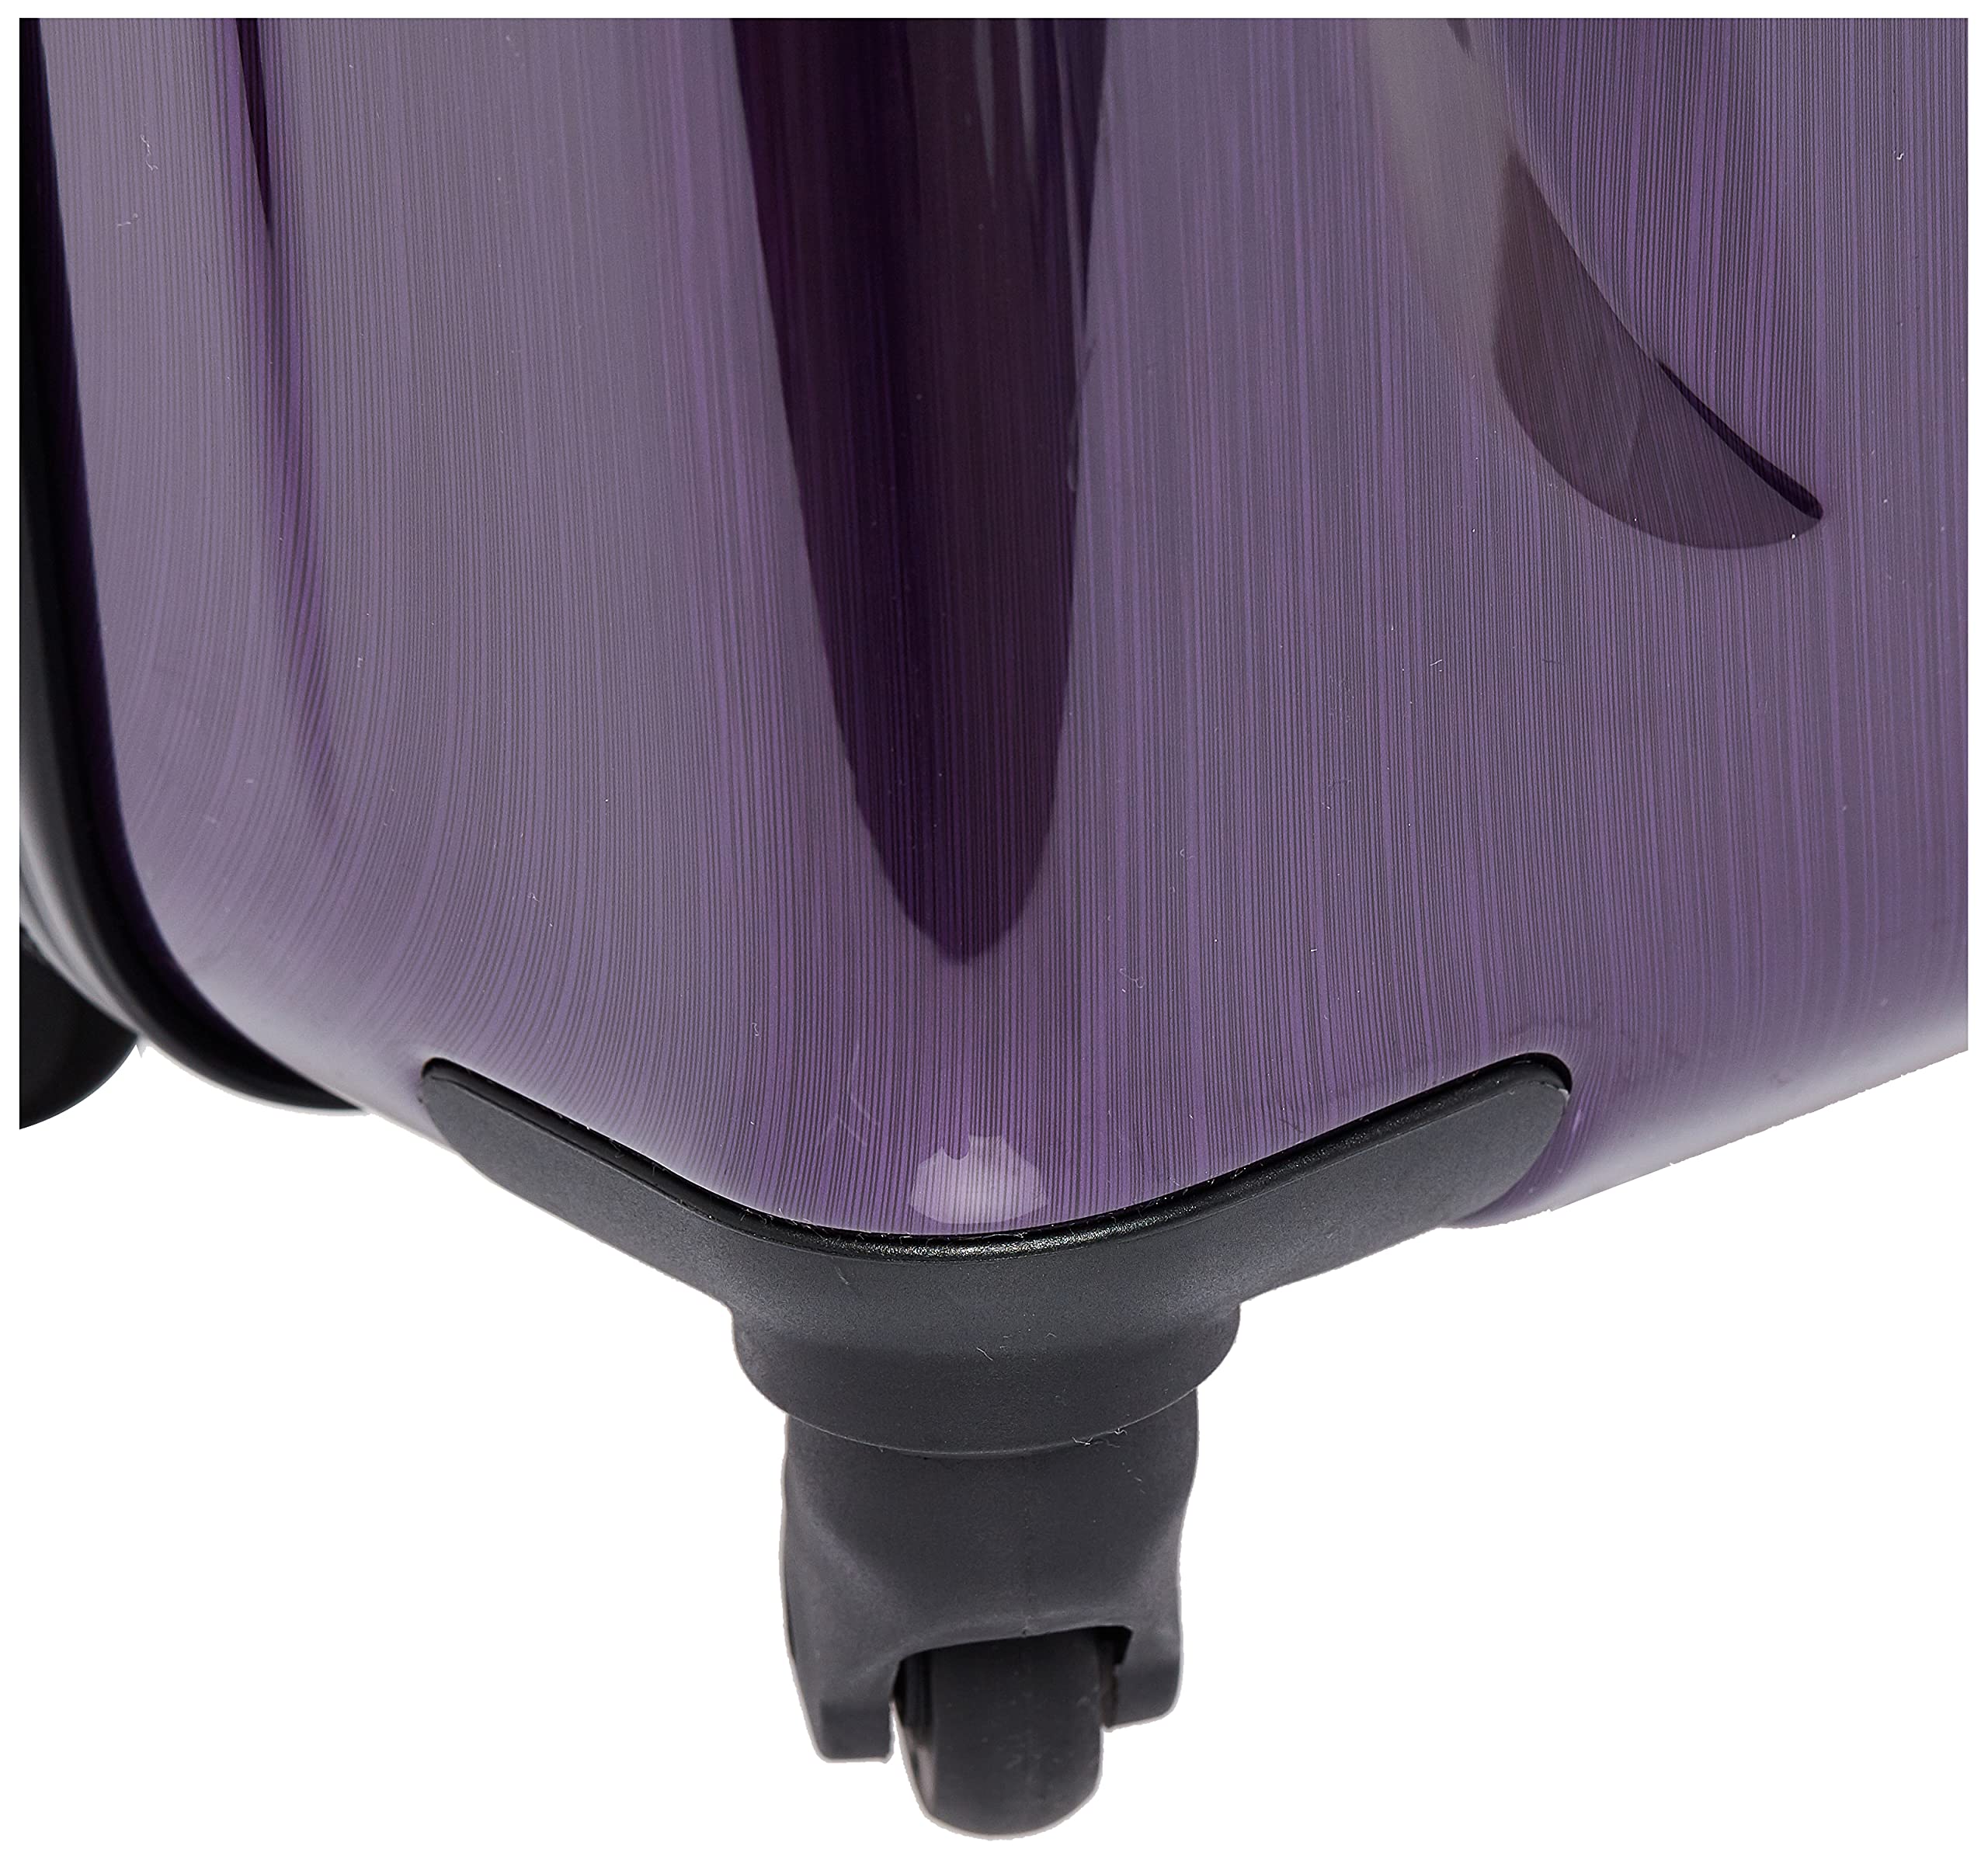 Samsonite Winfield 2 Hardside Luggage with Spinner Wheels, 3-Piece Set (20/24/28), Purple